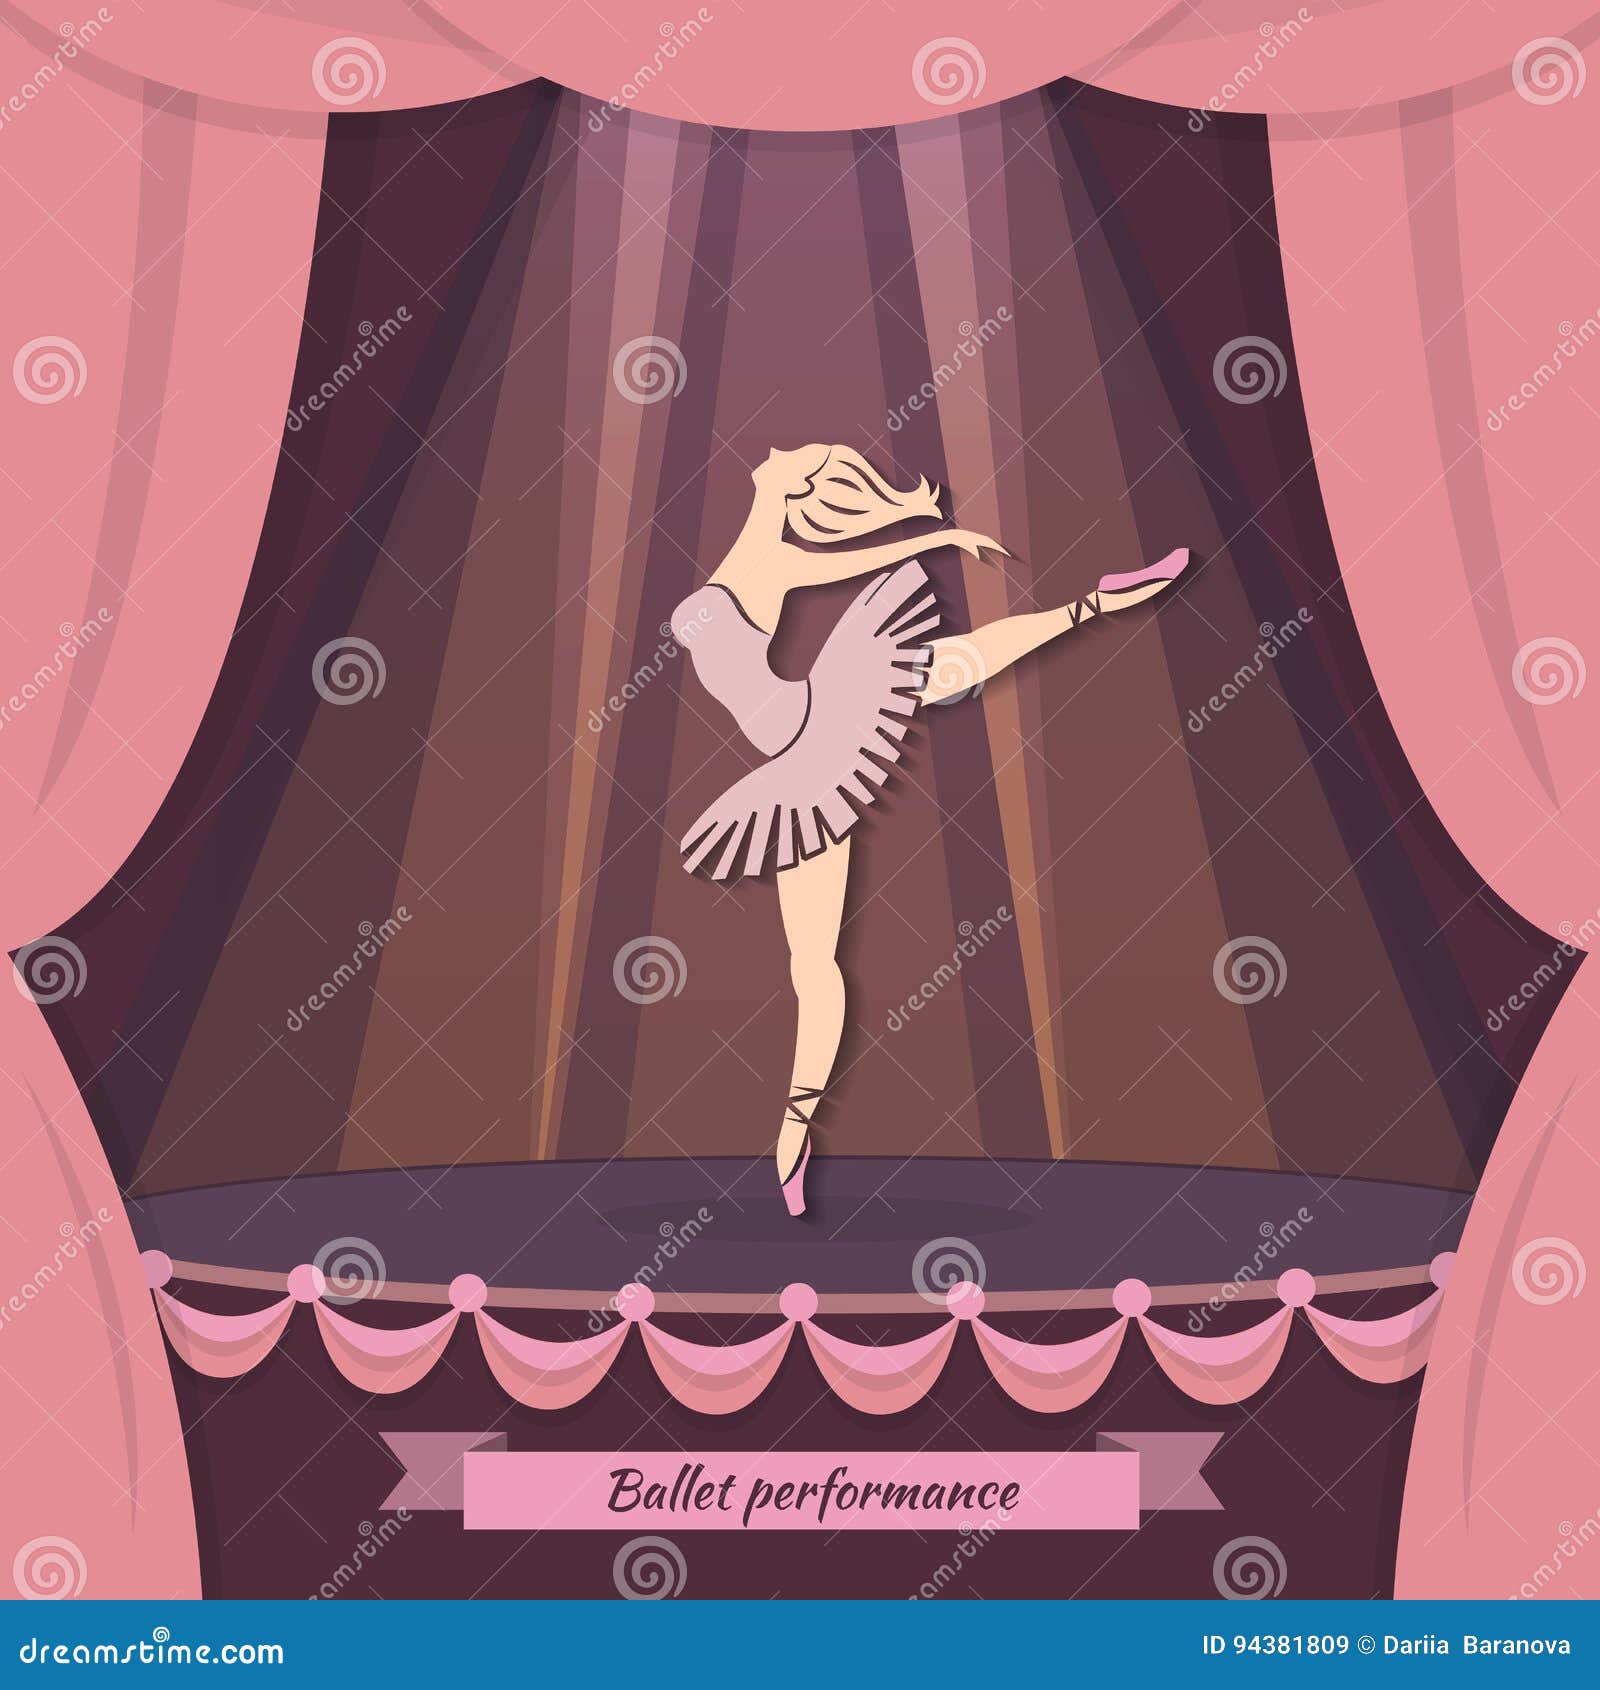 Ballet Performance Background Stock Vector - Illustration of invitation ...